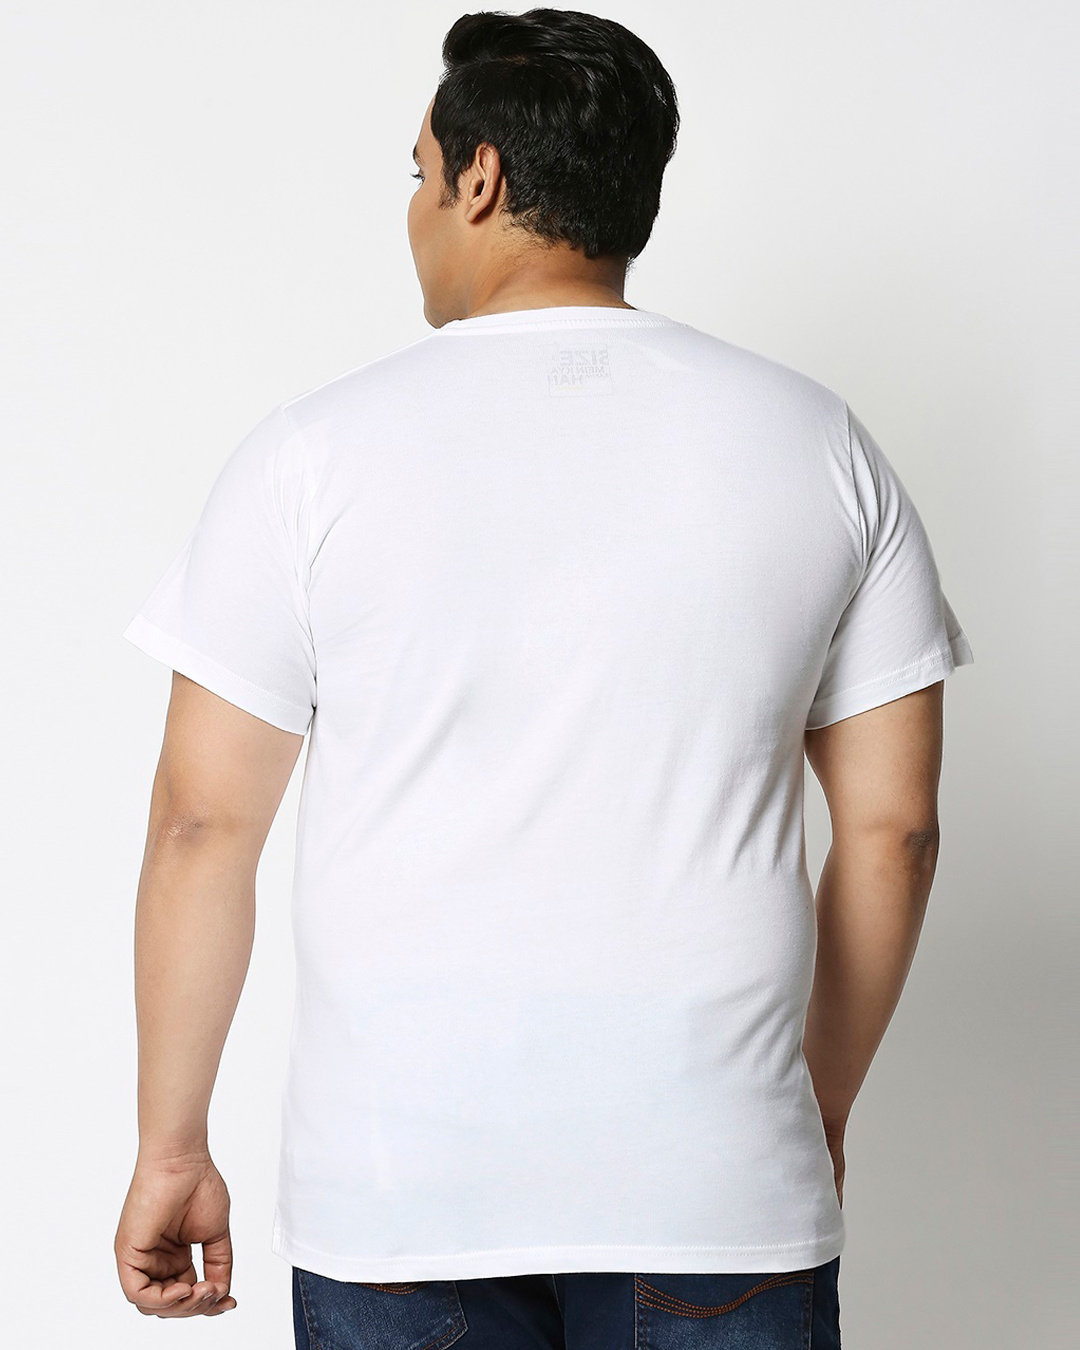 Shop Iron Face (AVL) Men's Half Sleeves T-shirt Plus Size-Back